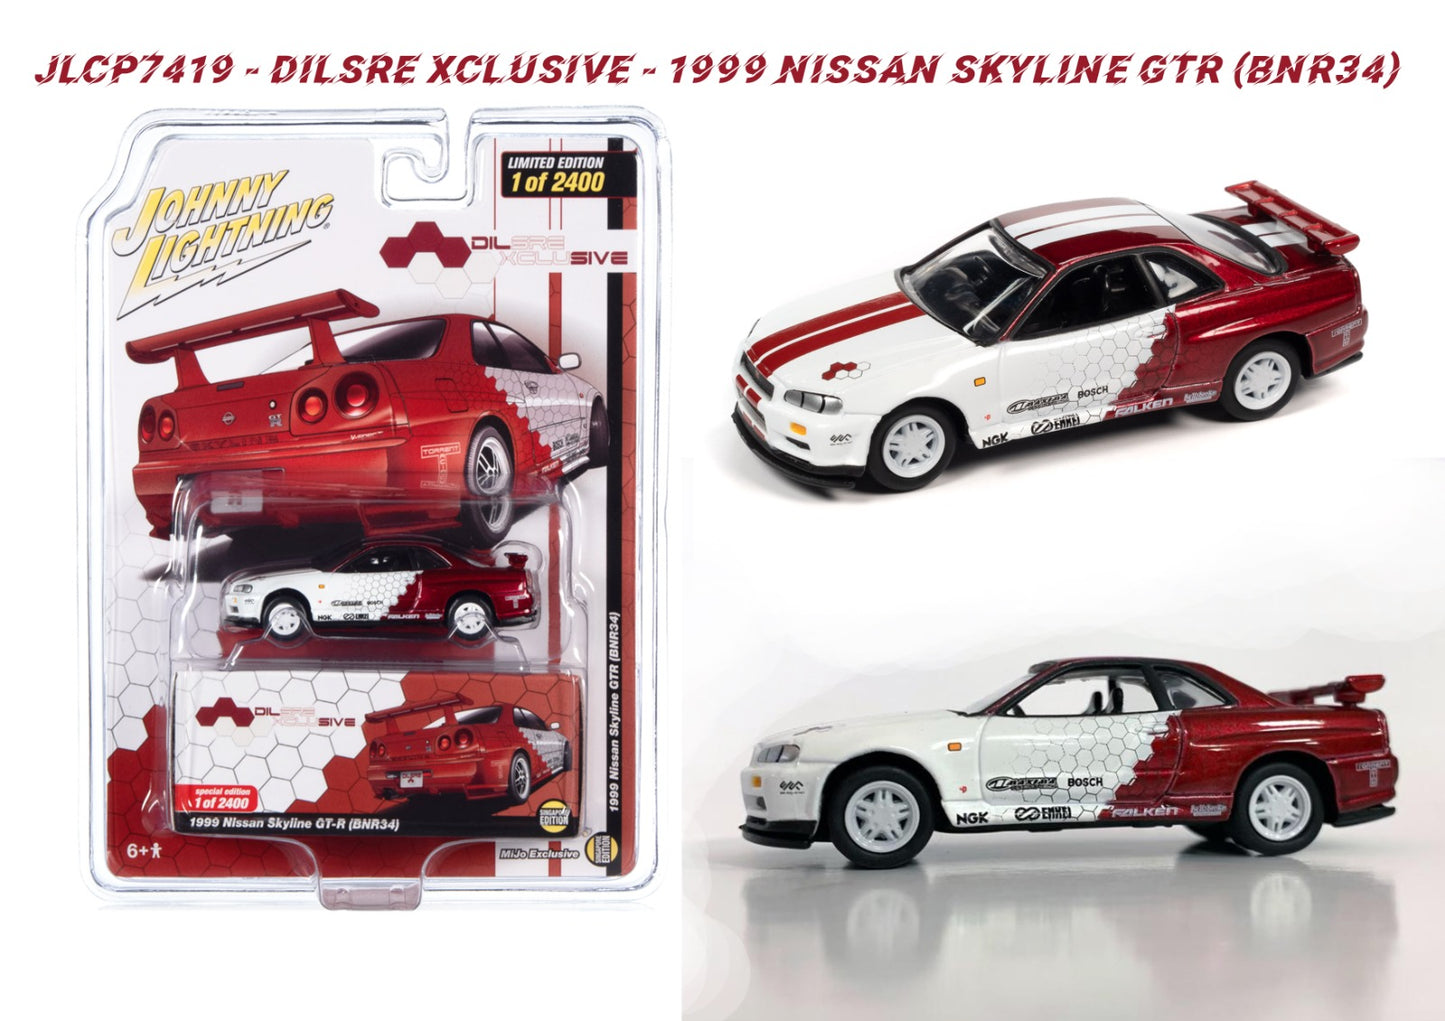 DilSre Xclusive - 1999 Nissan Skyline GTR (BNR34) - Singapore Edition